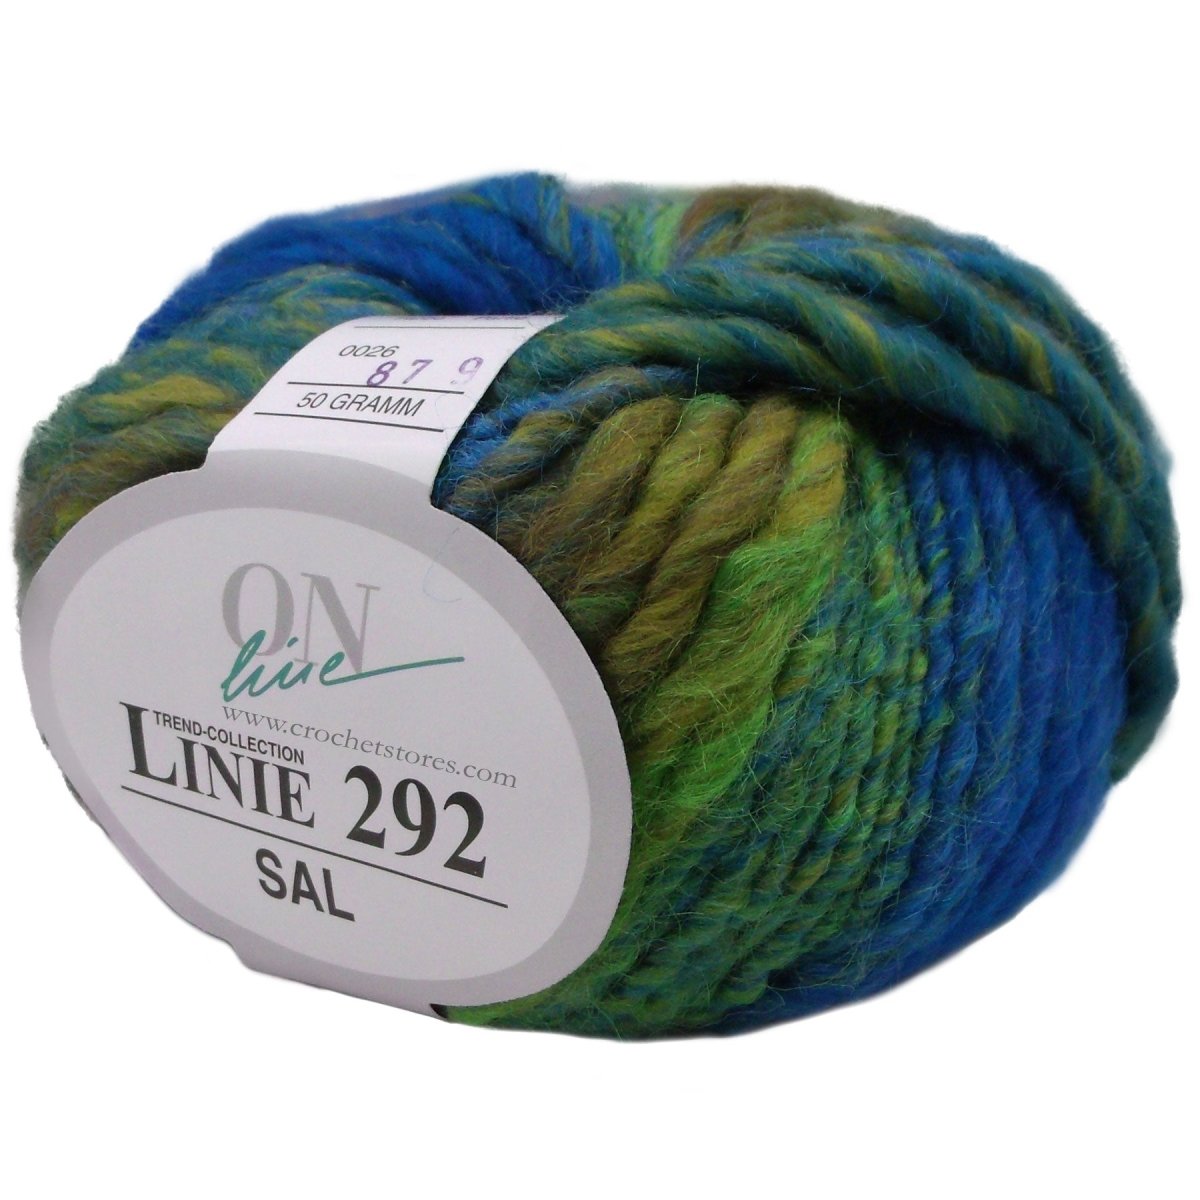 SAL - Crochetstores110292-00264014366151326